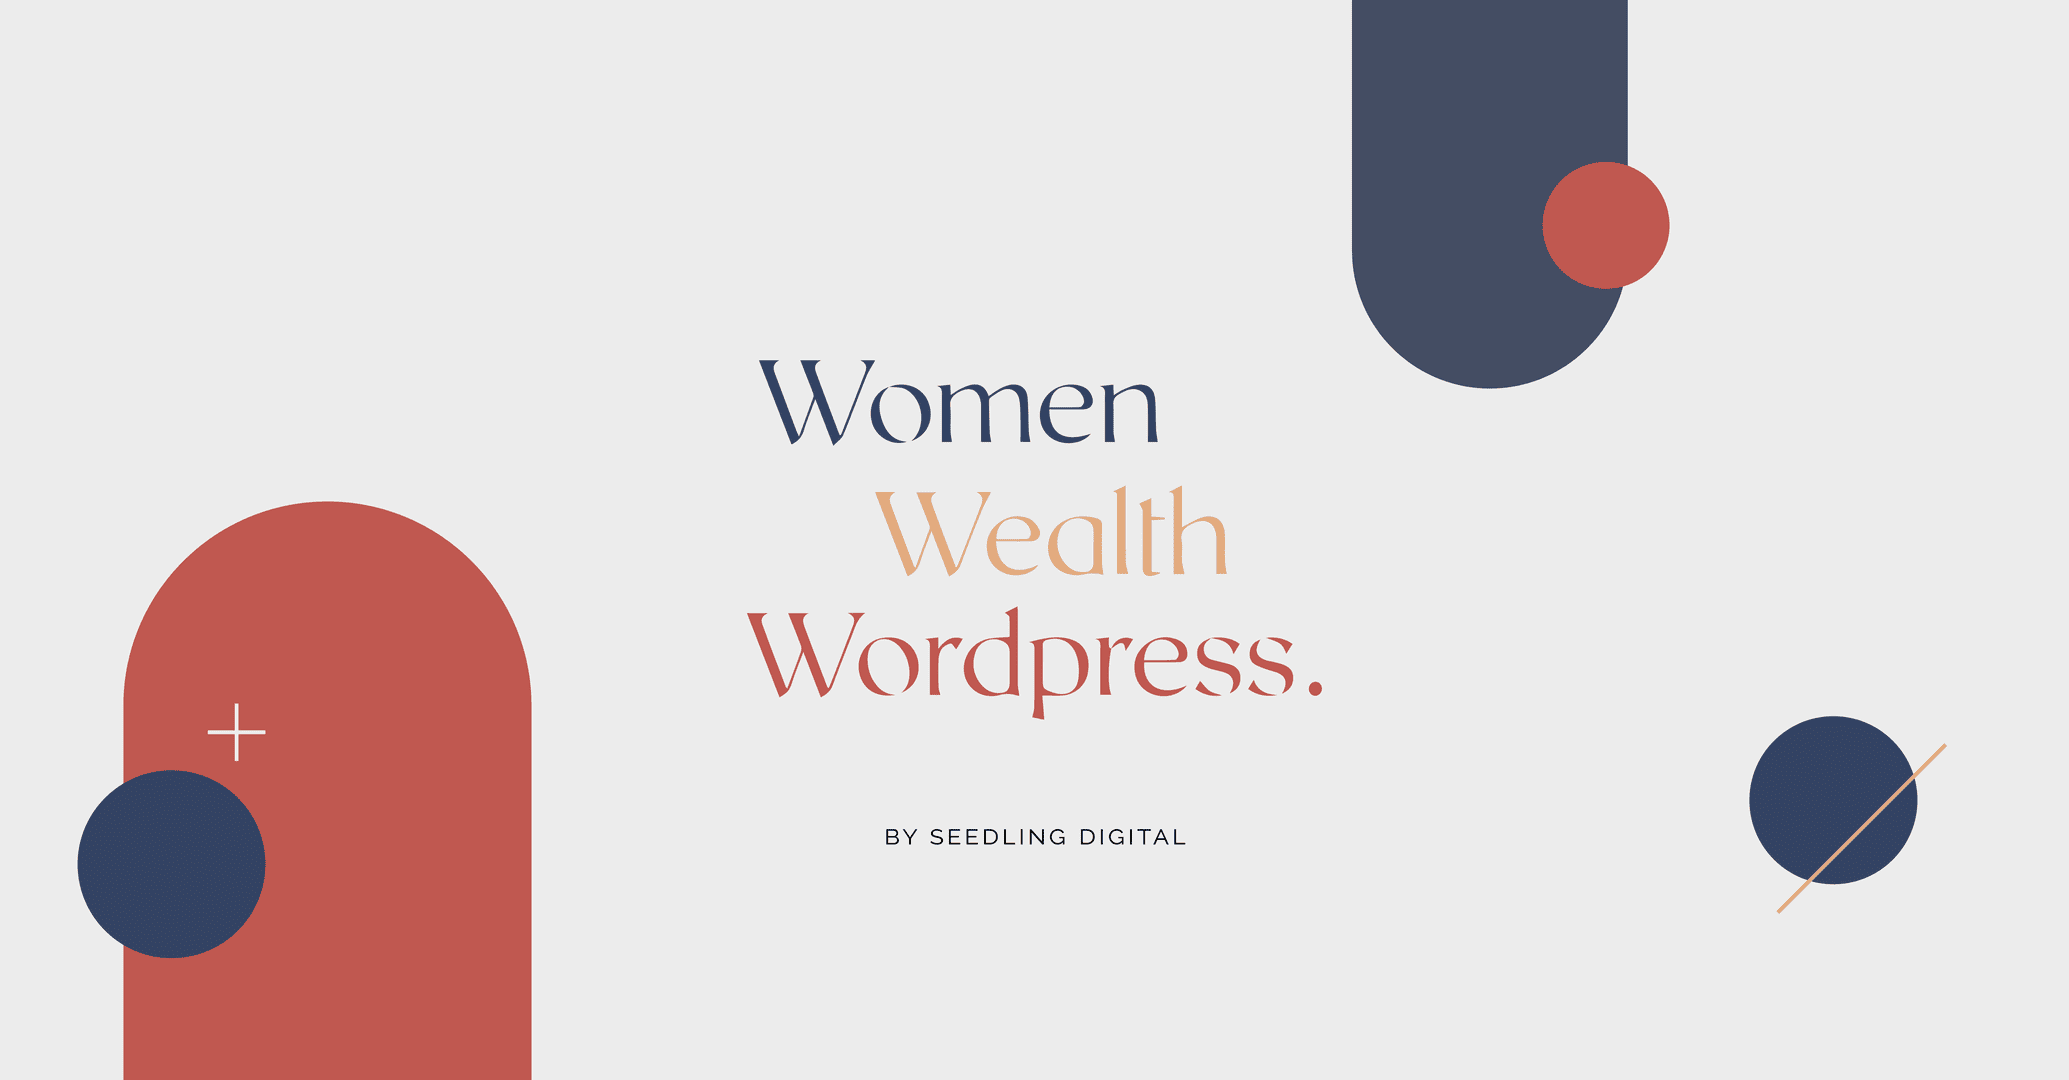 Women Wealth Wordpress FB Header 02